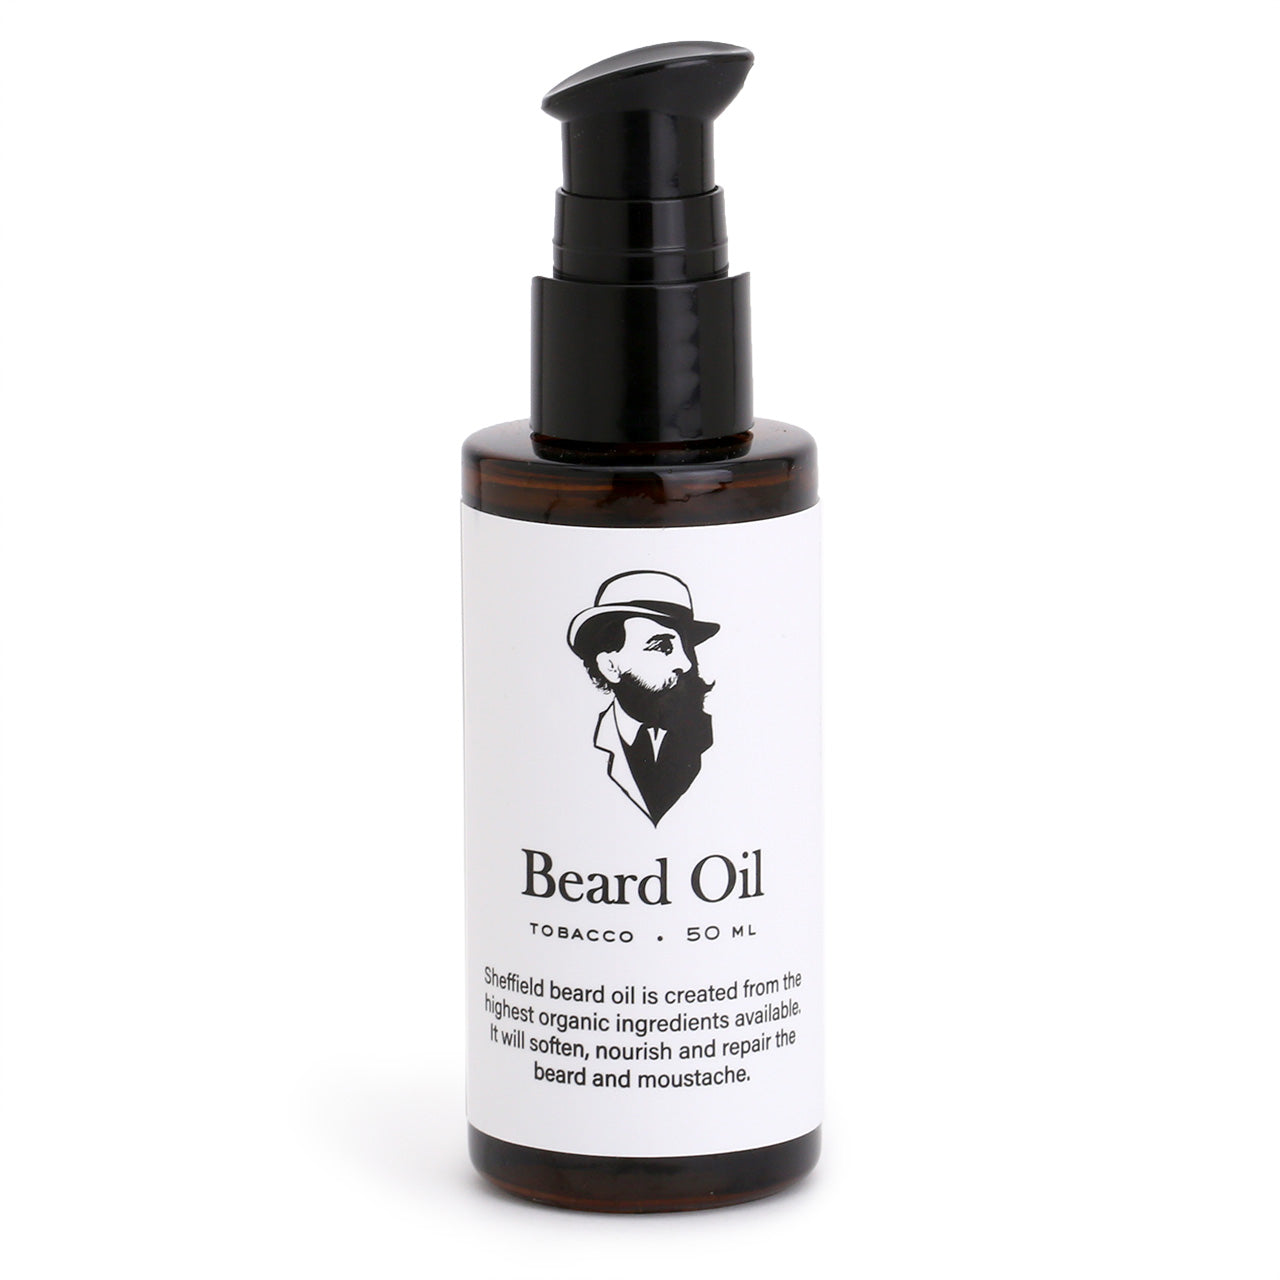 Sheffield Beard Care Gift Pack, with Beard Oil, Beard Balm and Beard Shampoo - Tobacco scent